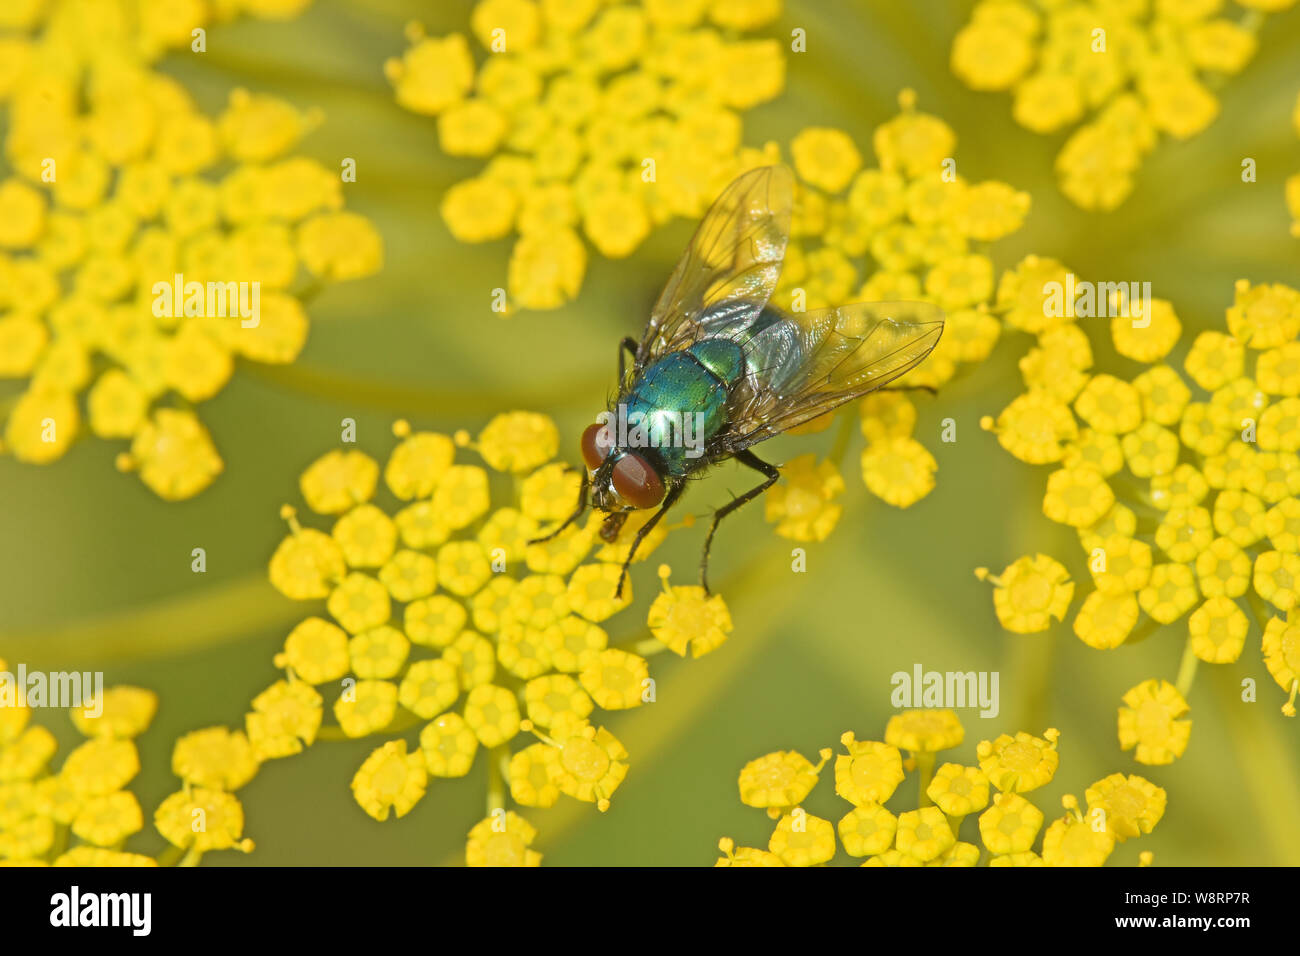 Green fly feeding on flower Stock Photo